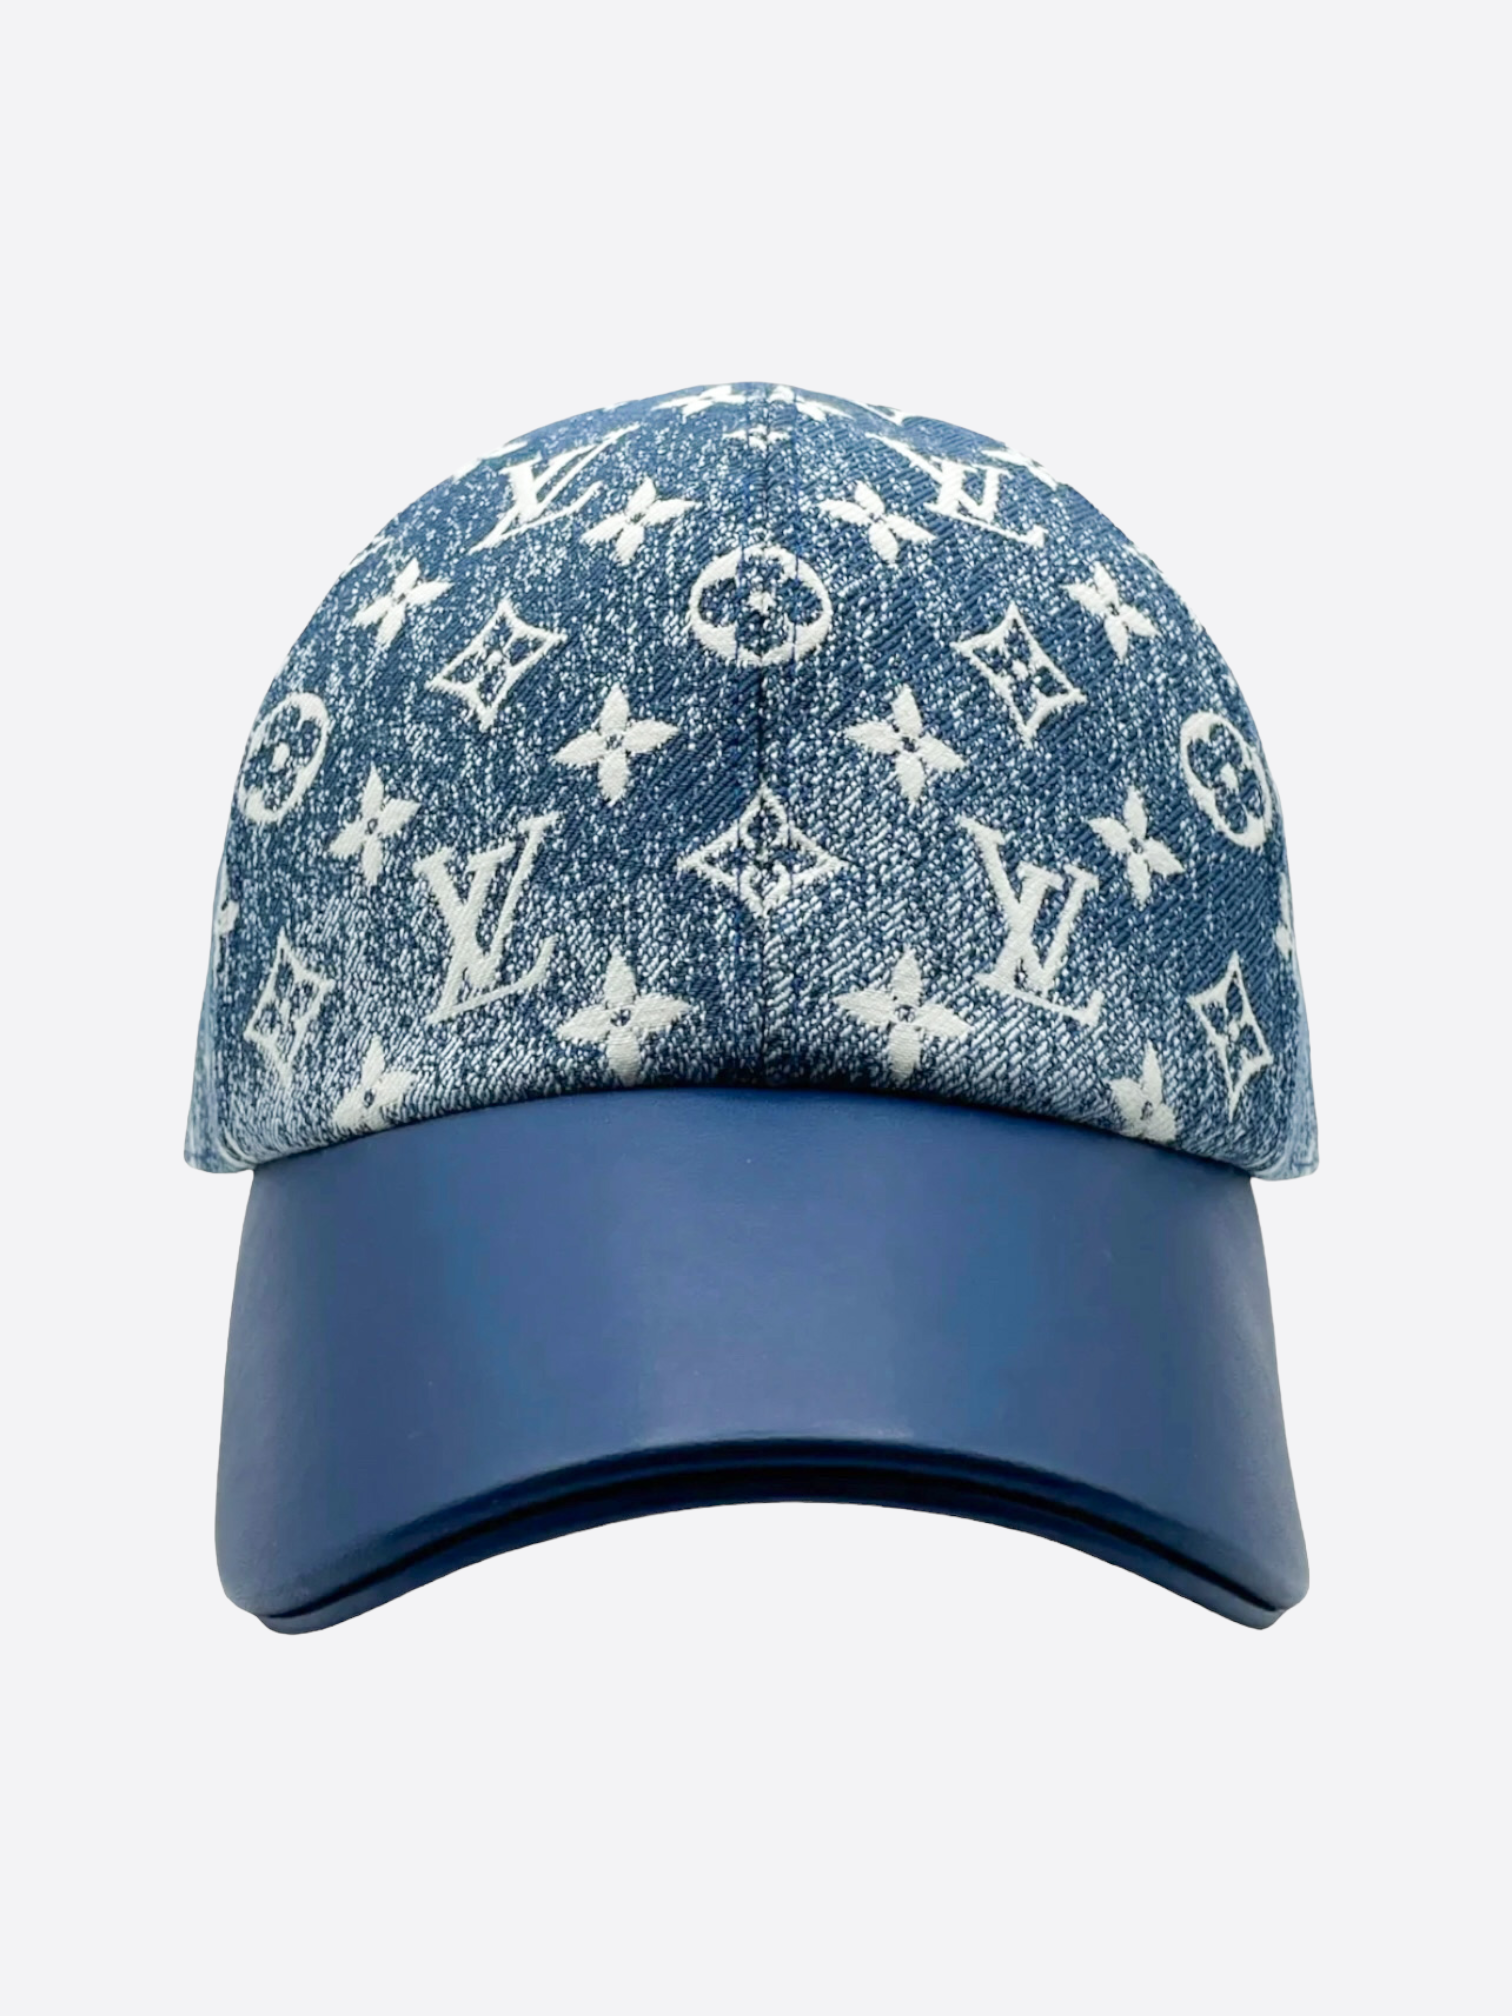 Louis Vuitton Monogram Legacy Cap Light Blue Denim in Cotton - US